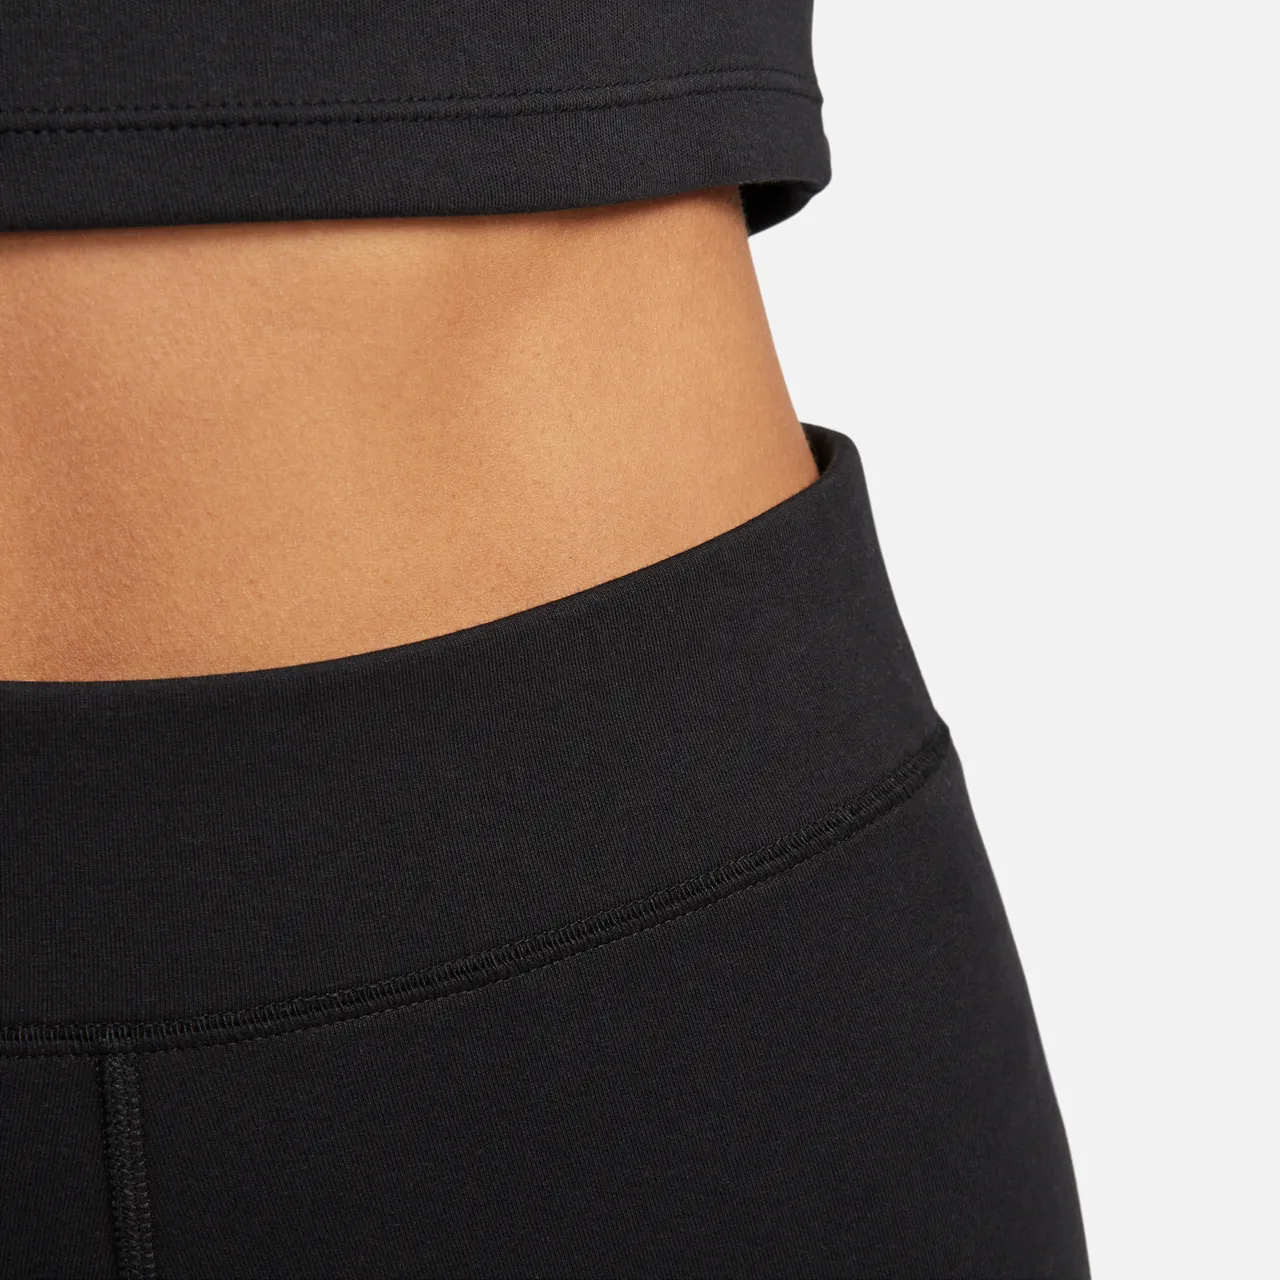 Nike Sportswear Classic bikeshorts met hoge taille voor dames (21 cm) - Zwart